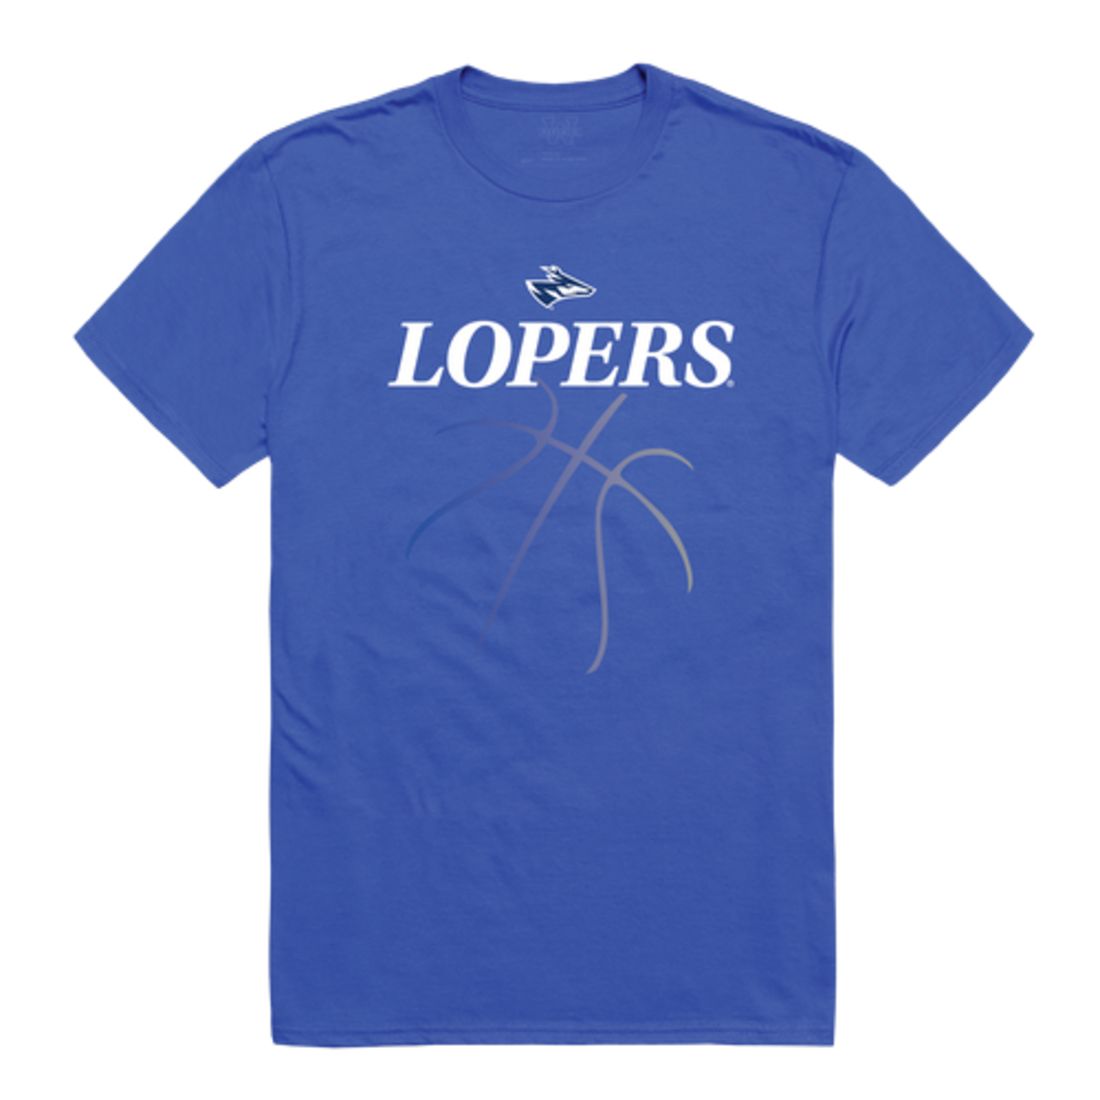 Nebraska Kearney Lopers Basketball T-Shirt